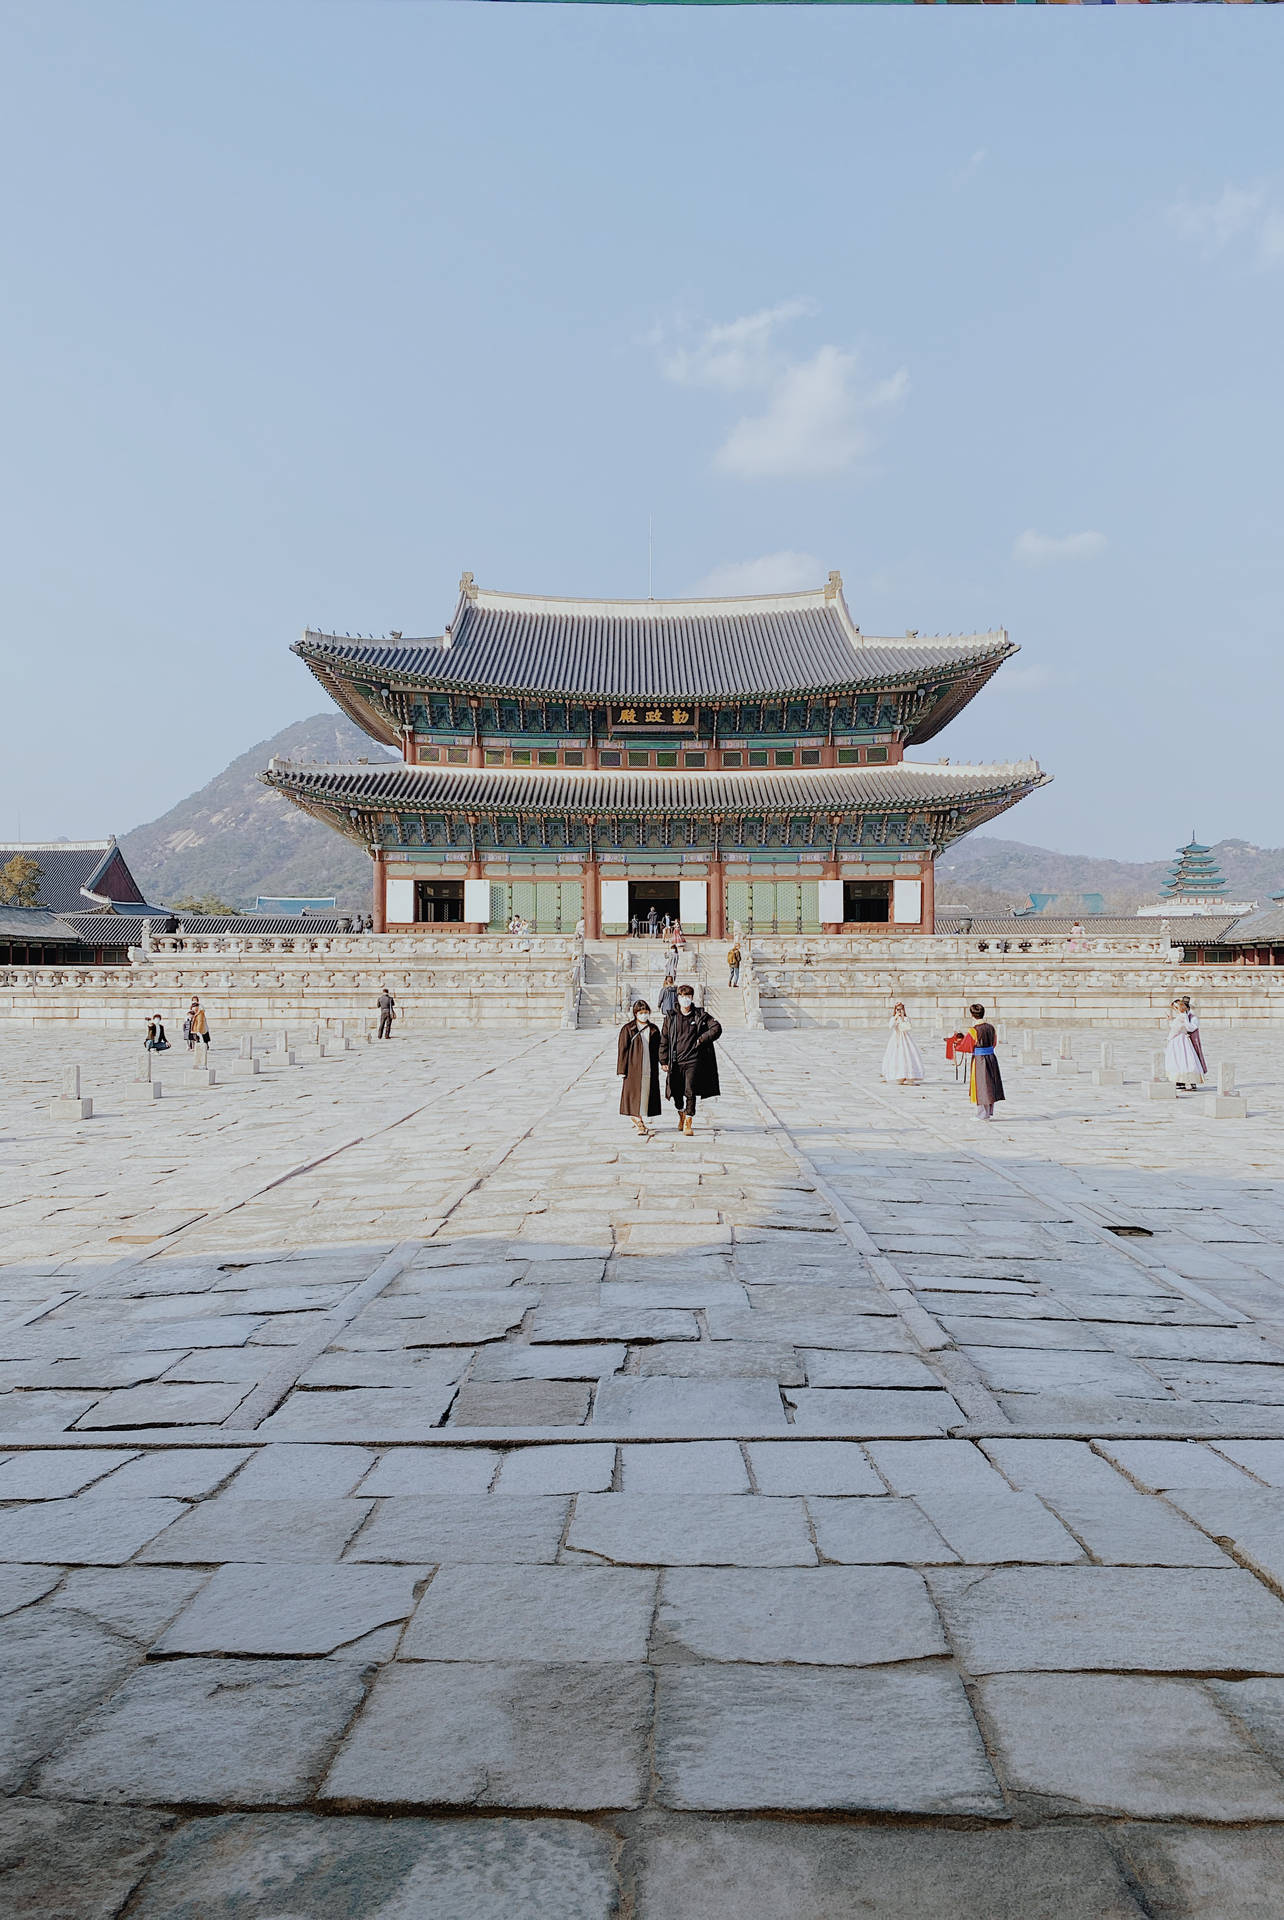 Seoul Geunjeongjeon Throne Hall Background